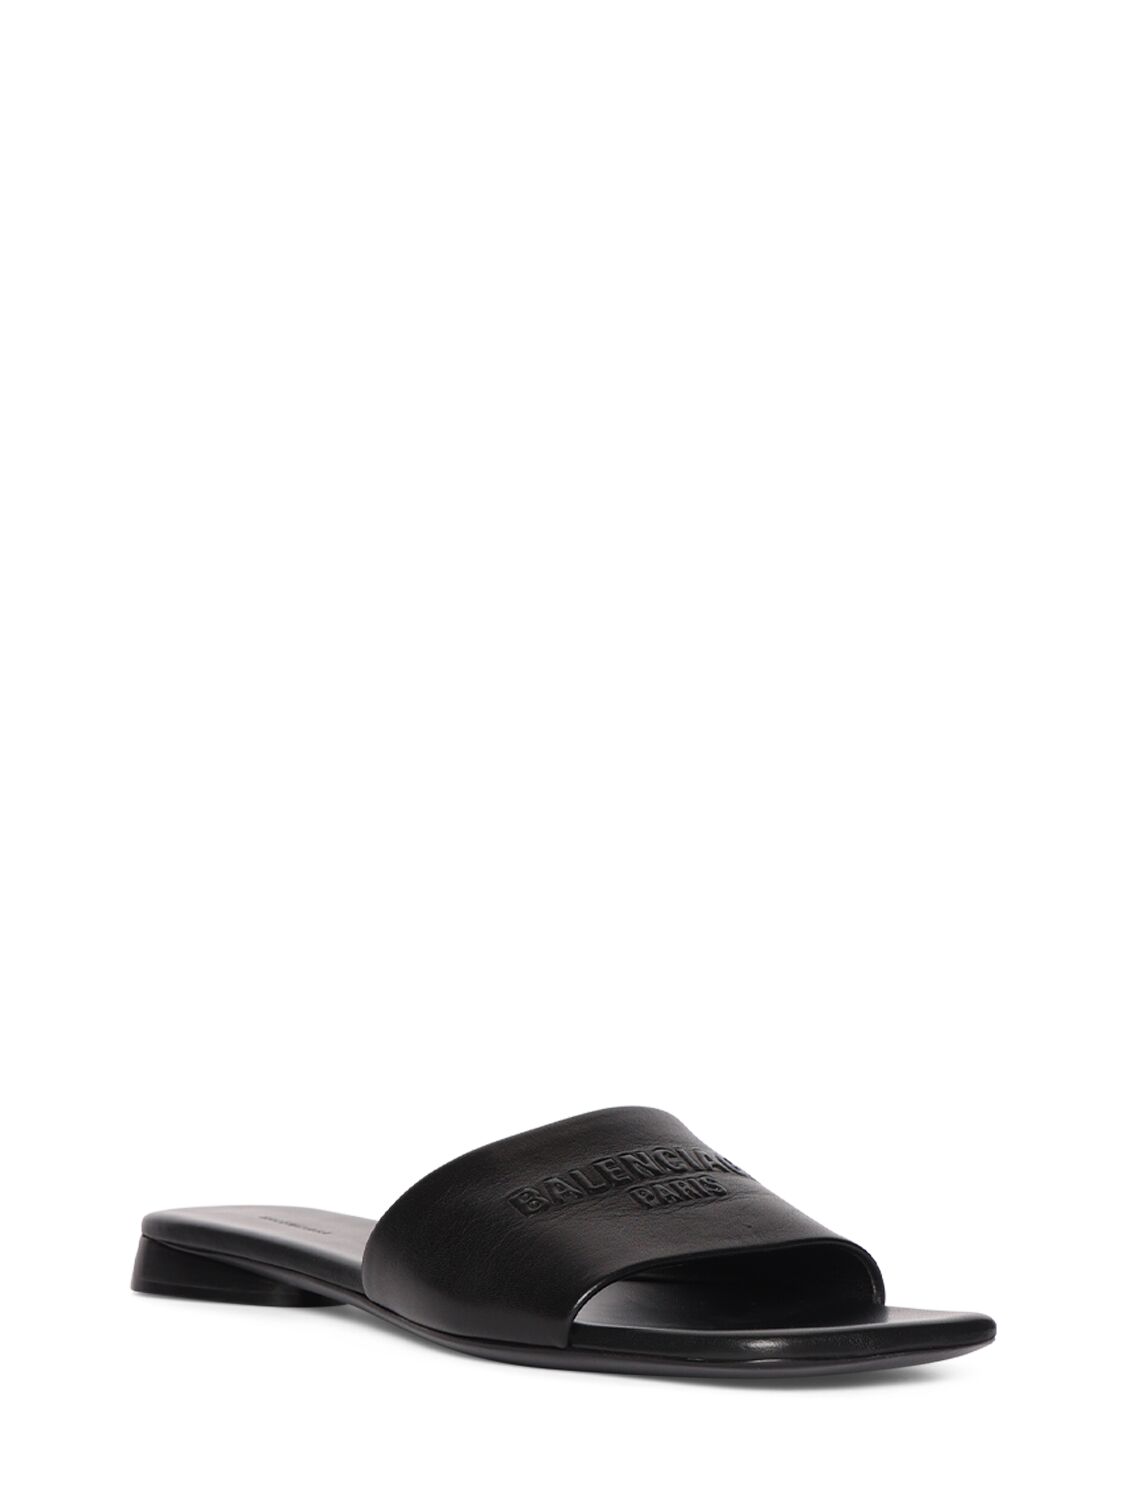 Shop Balenciaga 10mm Dutyfree Shiny Leather Sandals In Black